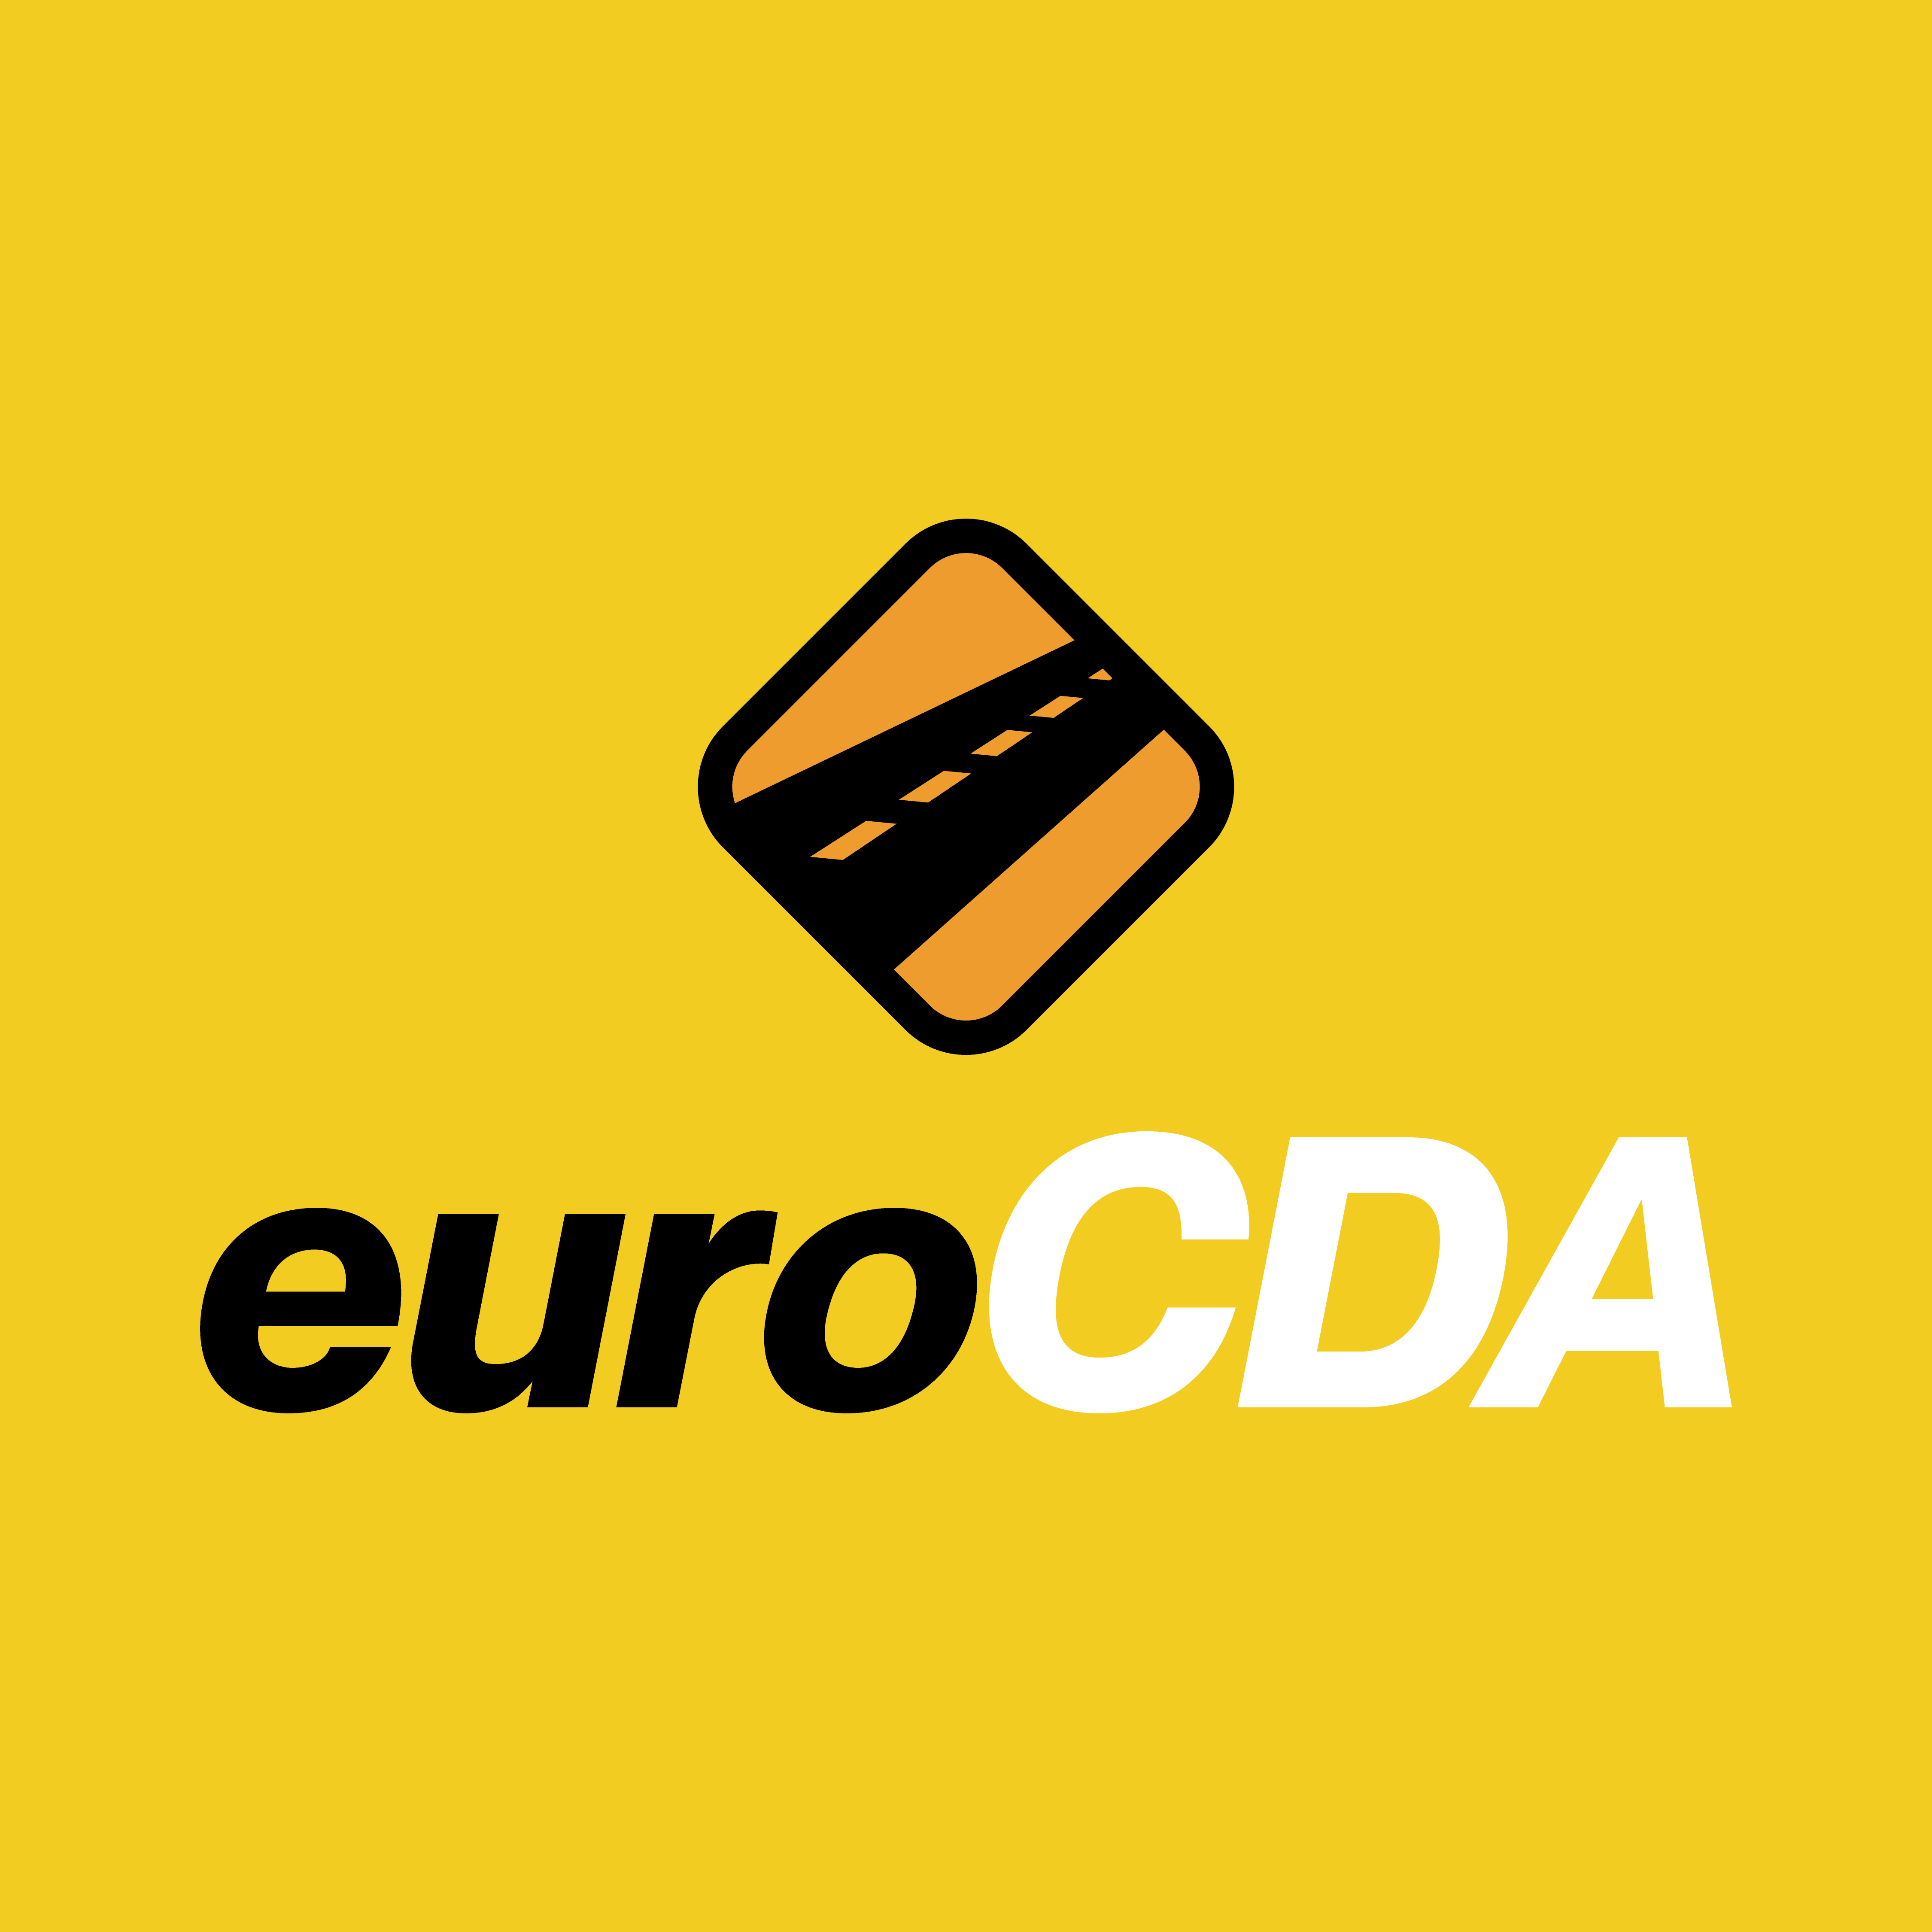 EURO CDA logo